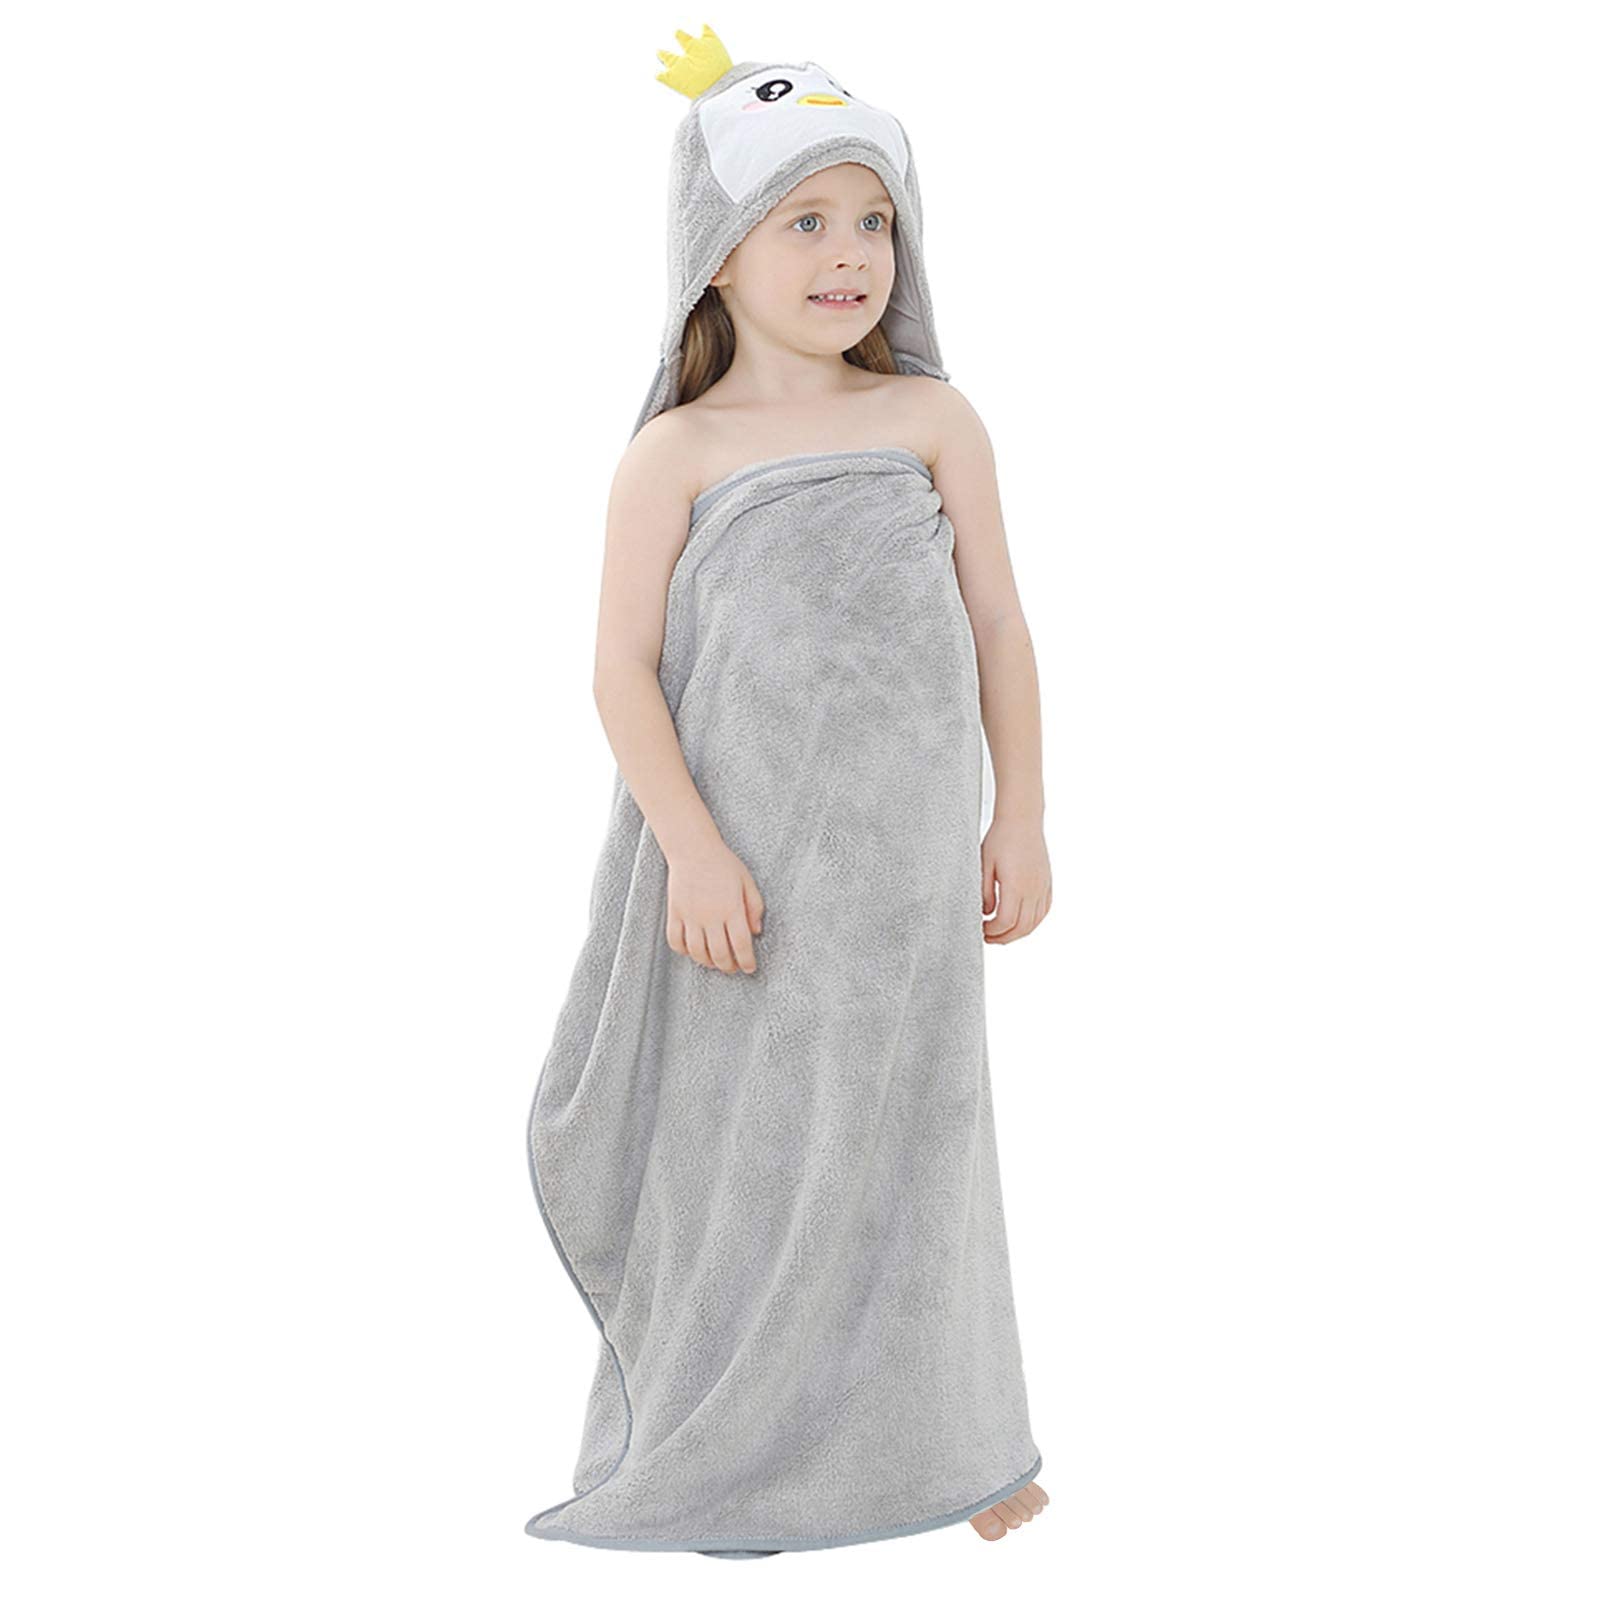 Michley Cartoon Hooded Baby Towel Unisex, Premium Soft Swimming Bathrobe Large Washcloths 315 X 53 For 0-9T (Penguin)